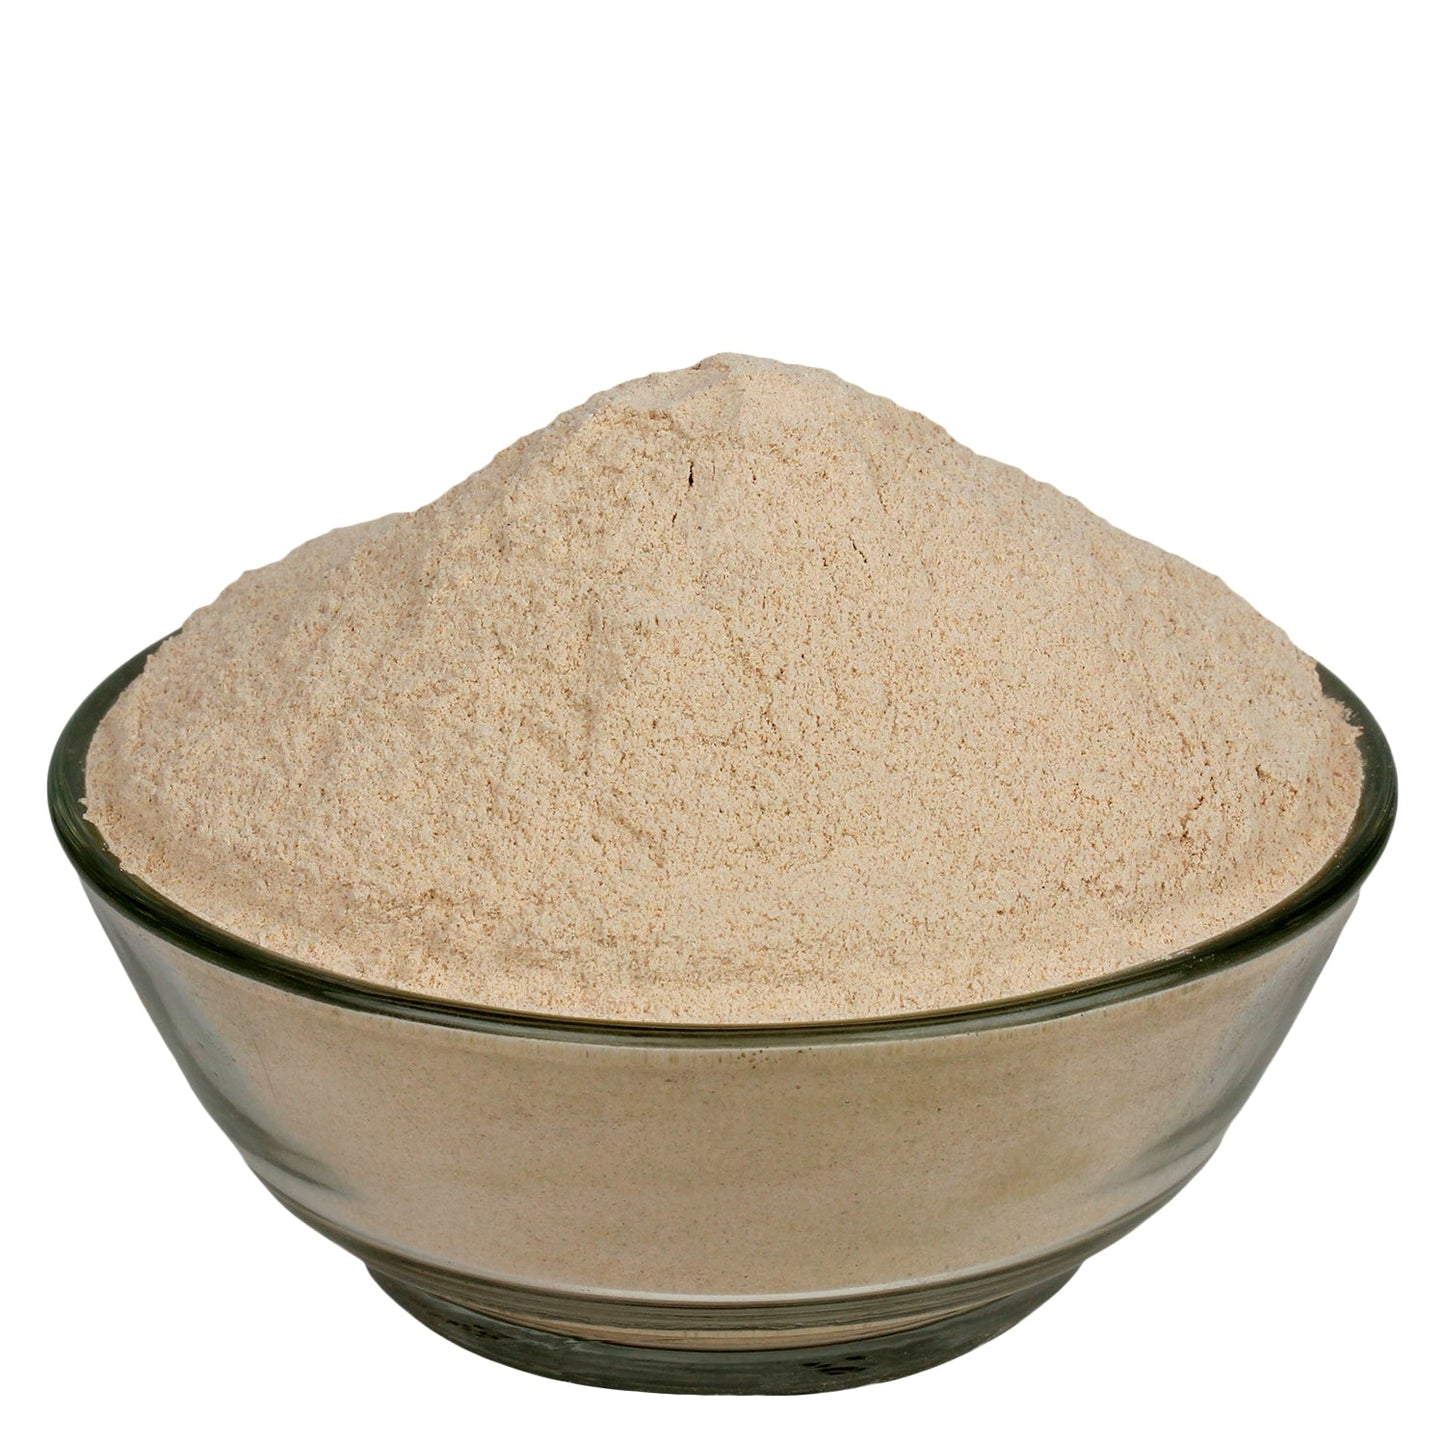 Gokhru Bada Powder - Pedalium Murex - Large Caltrops (200 Grams)